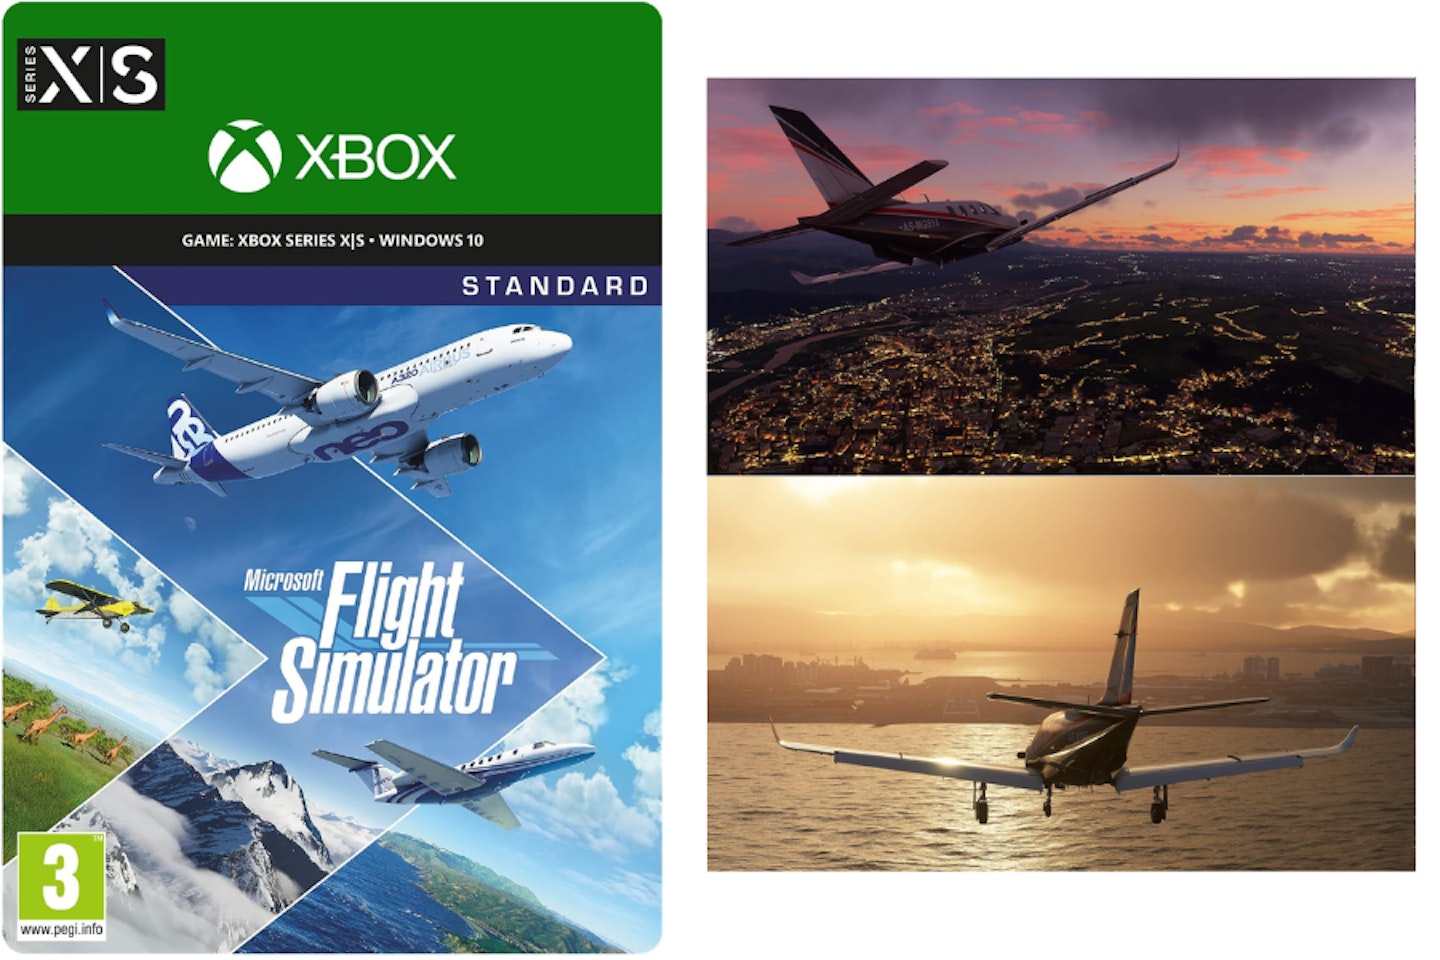 Microsoft Flight Simulator - one of the best PC games